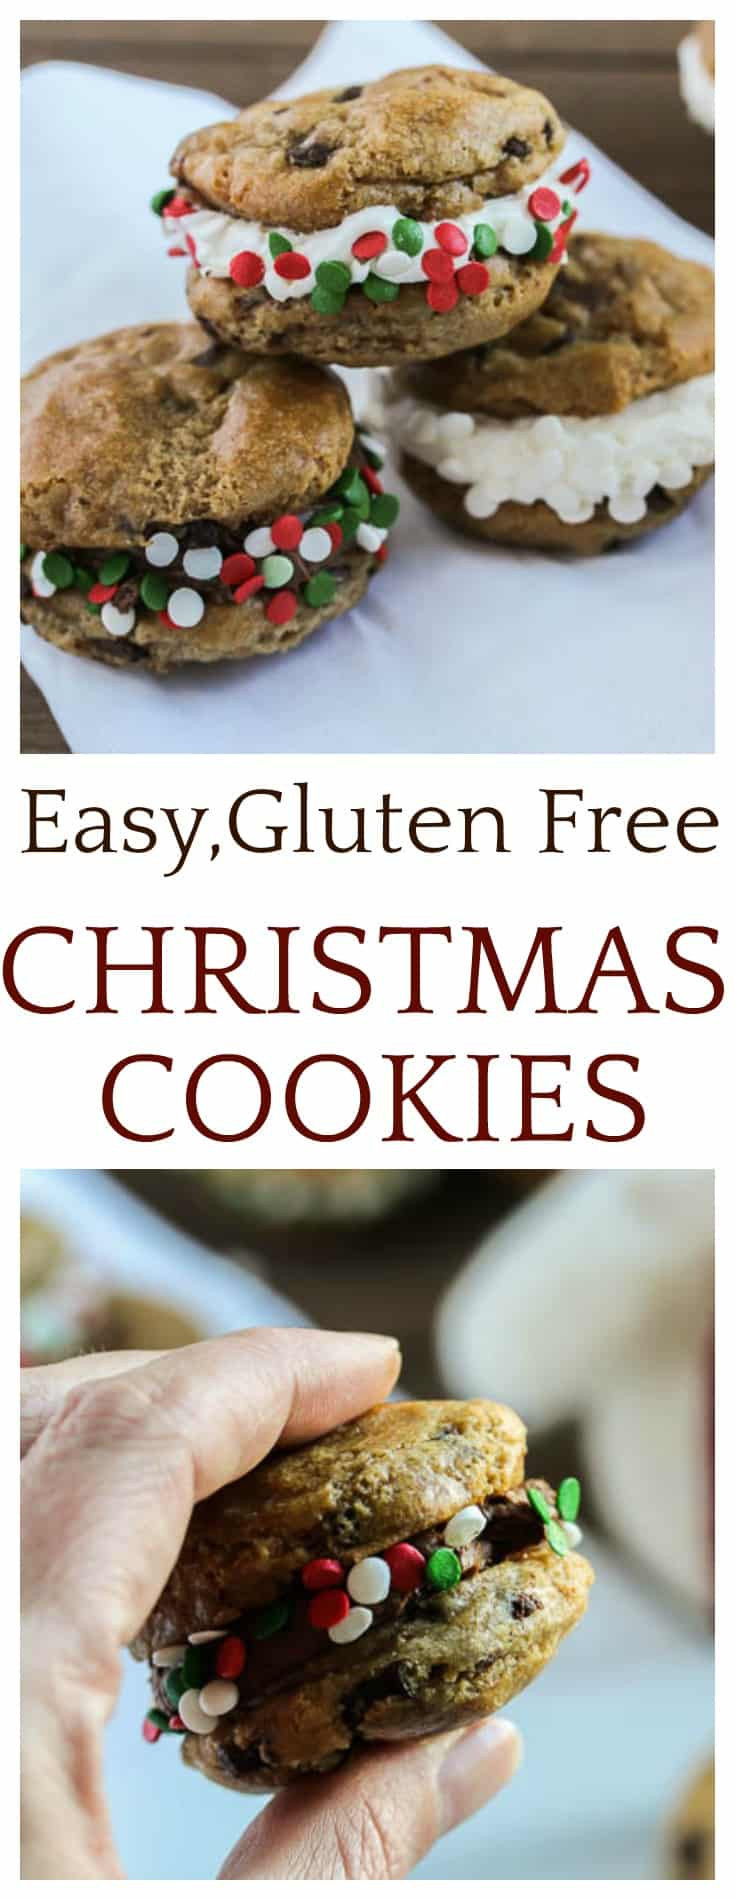 Easy Gluten Free Christmas Cookies
 Easy Gluten Free Christmas Cookies with Immaculate Baking